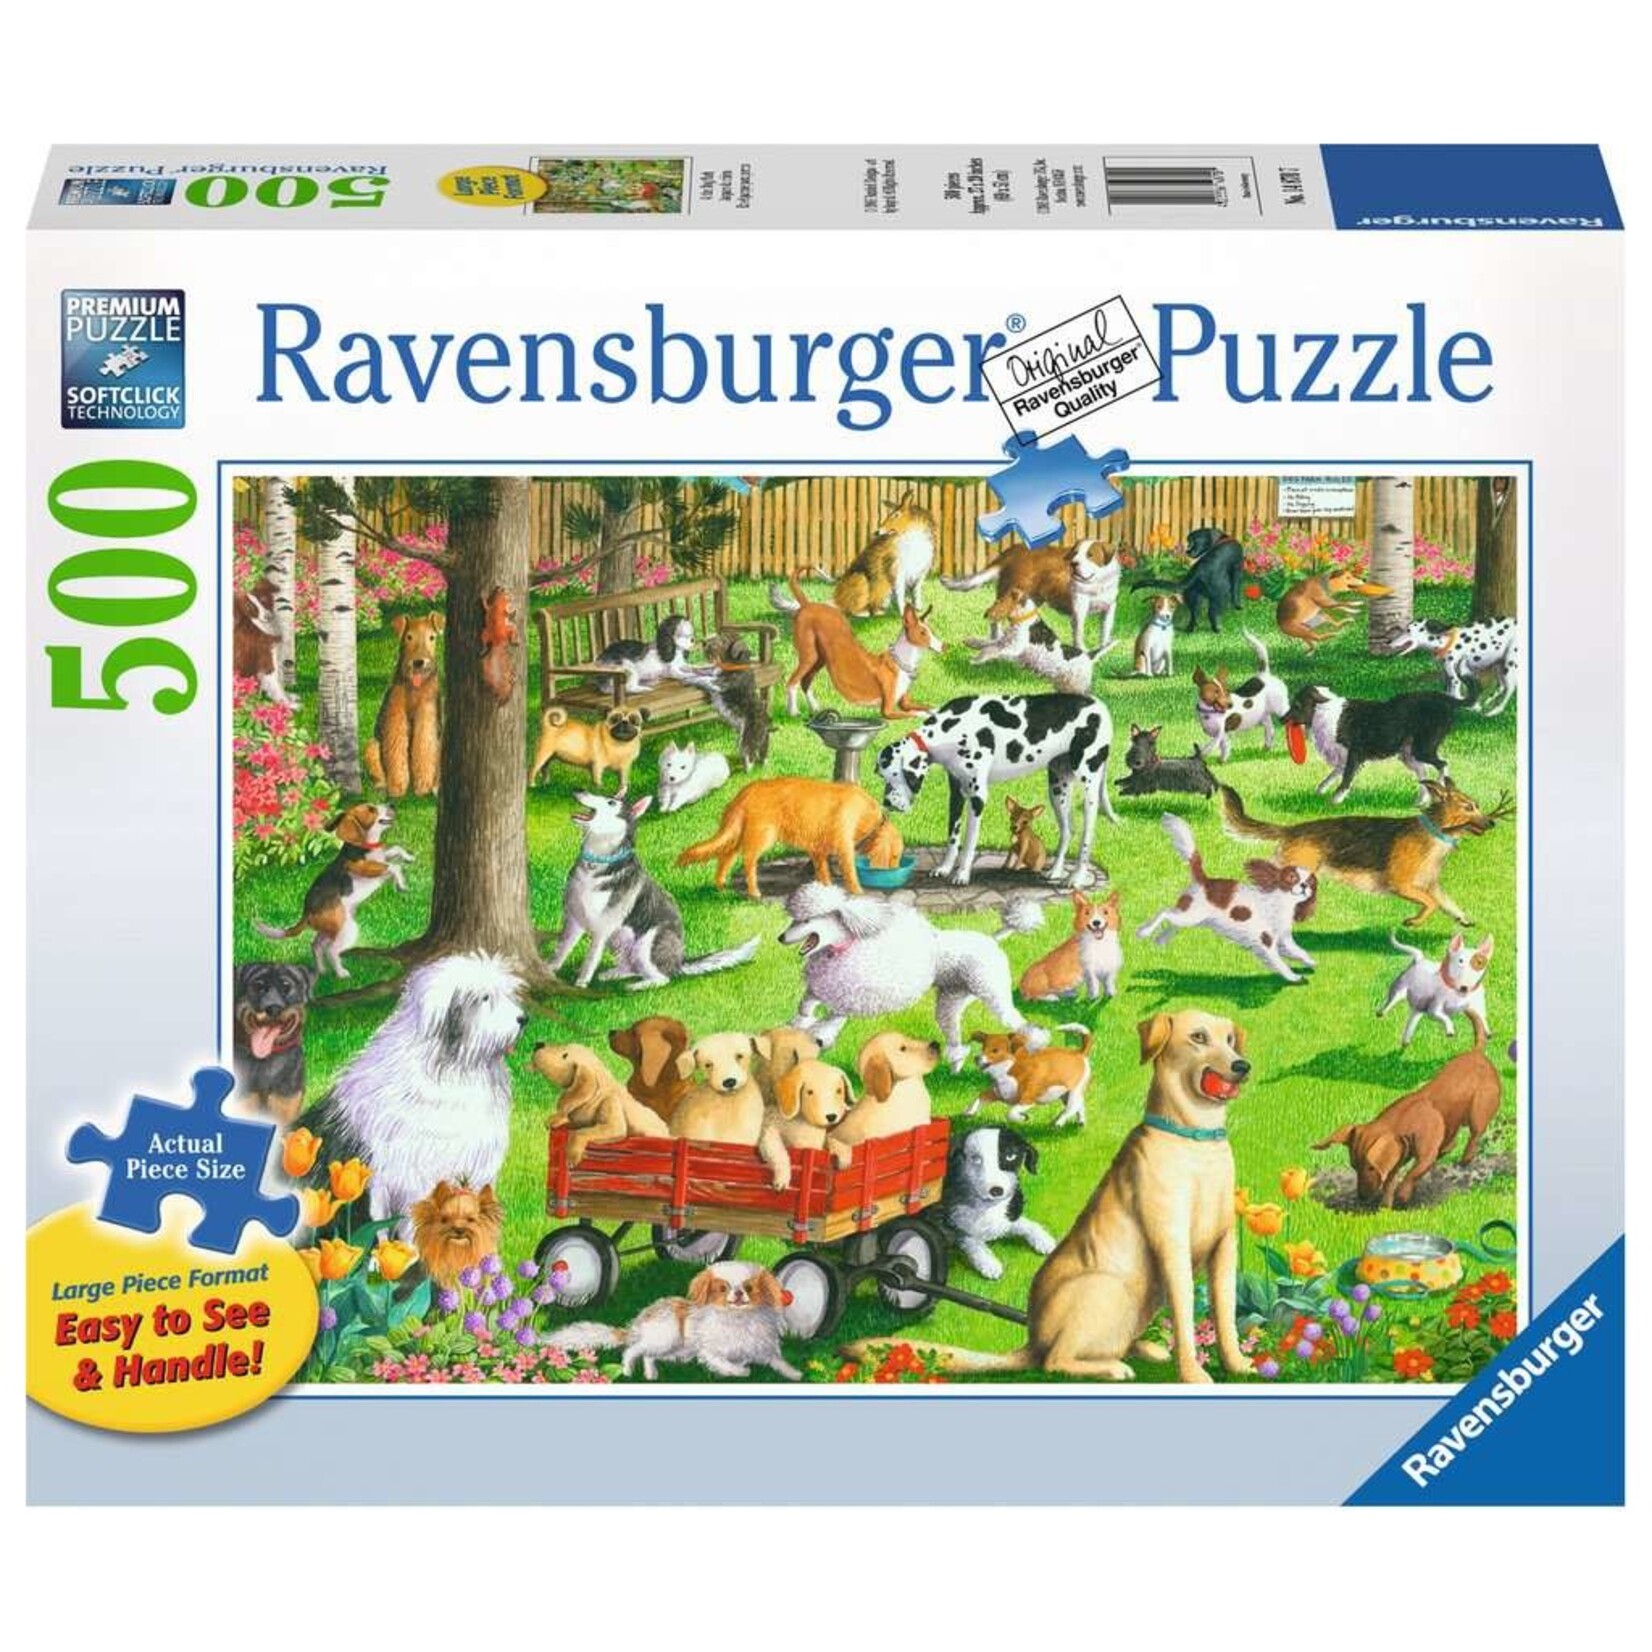 Ravensburger At the Dog Park - 500 pc Large Piece Puzzle